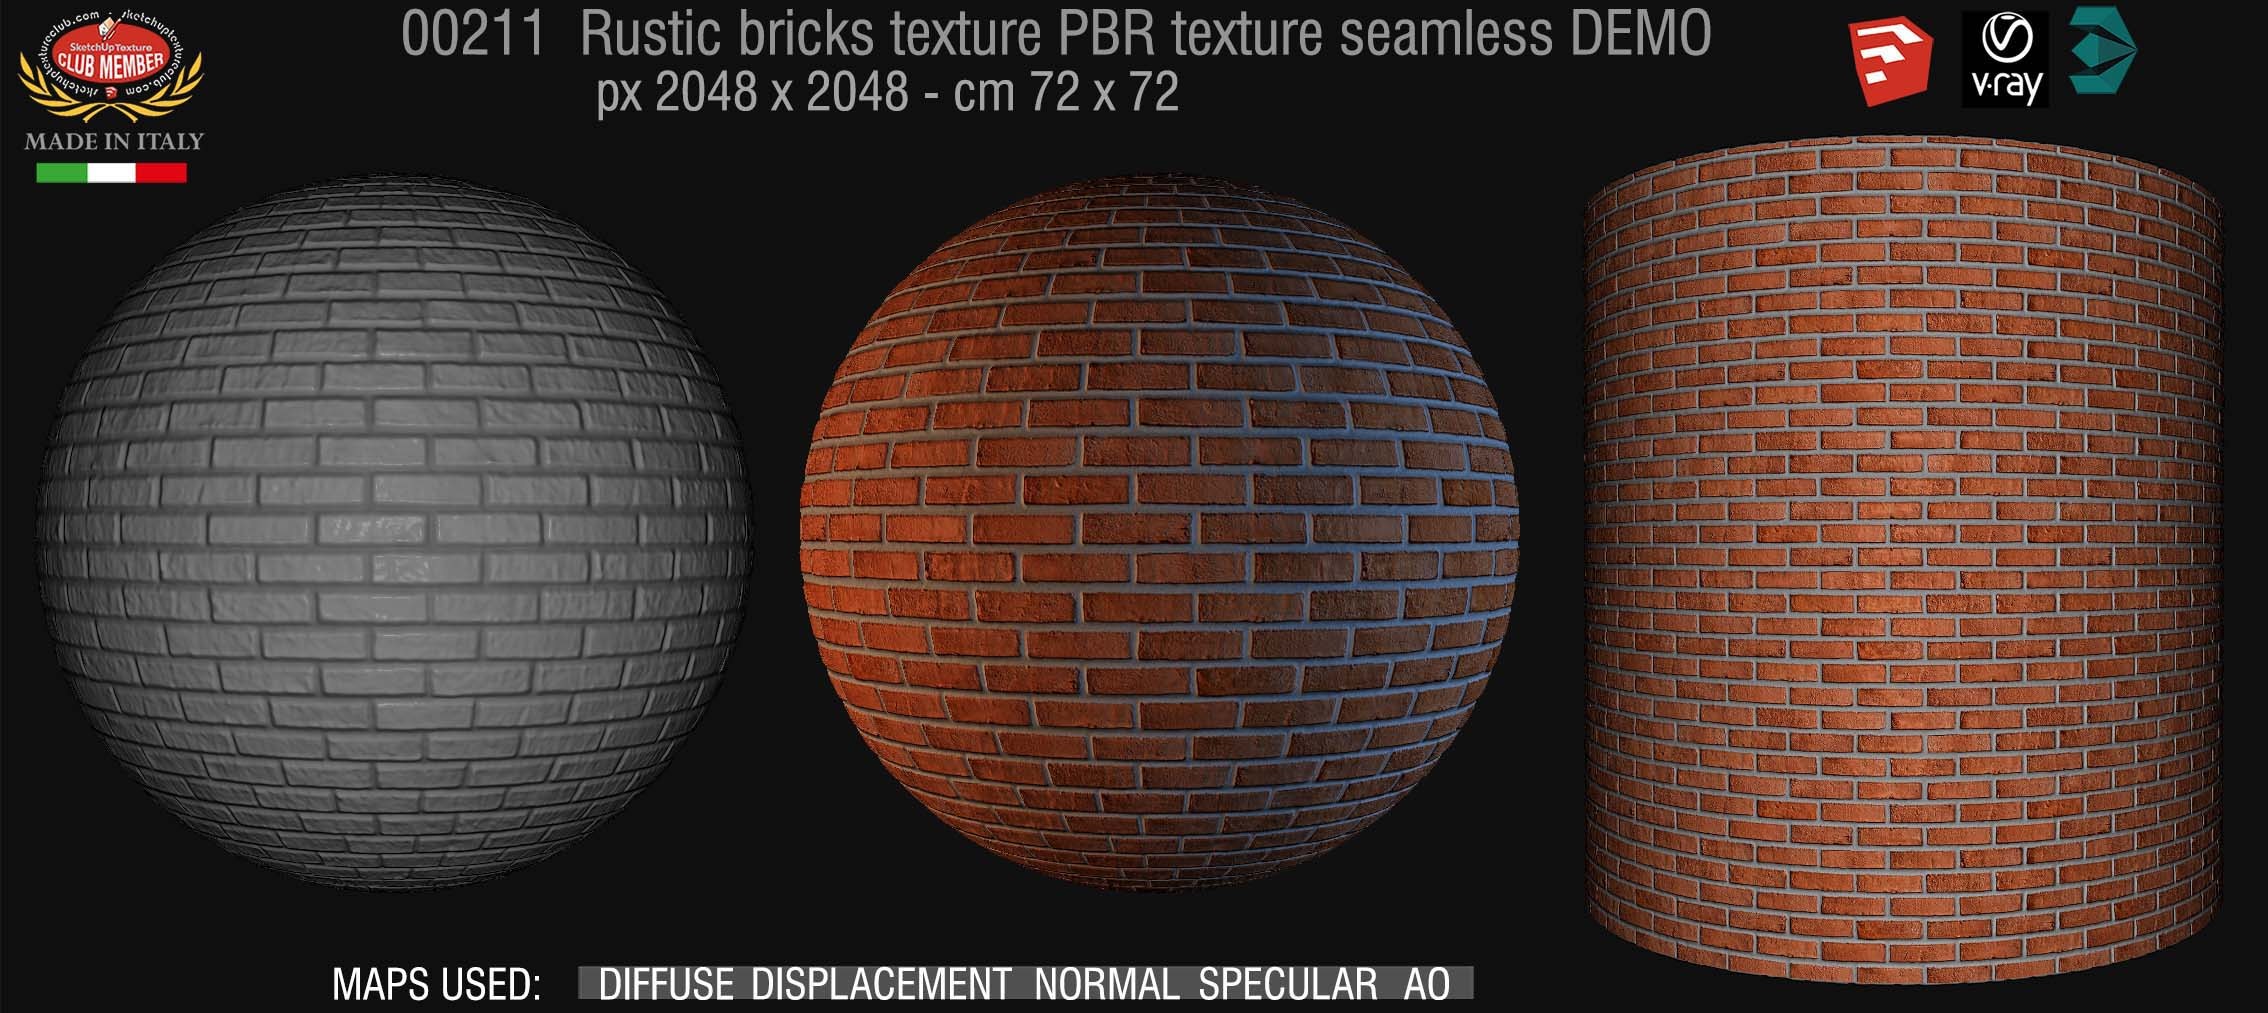 00211 rustic bricks PBR texture seamless DEMO